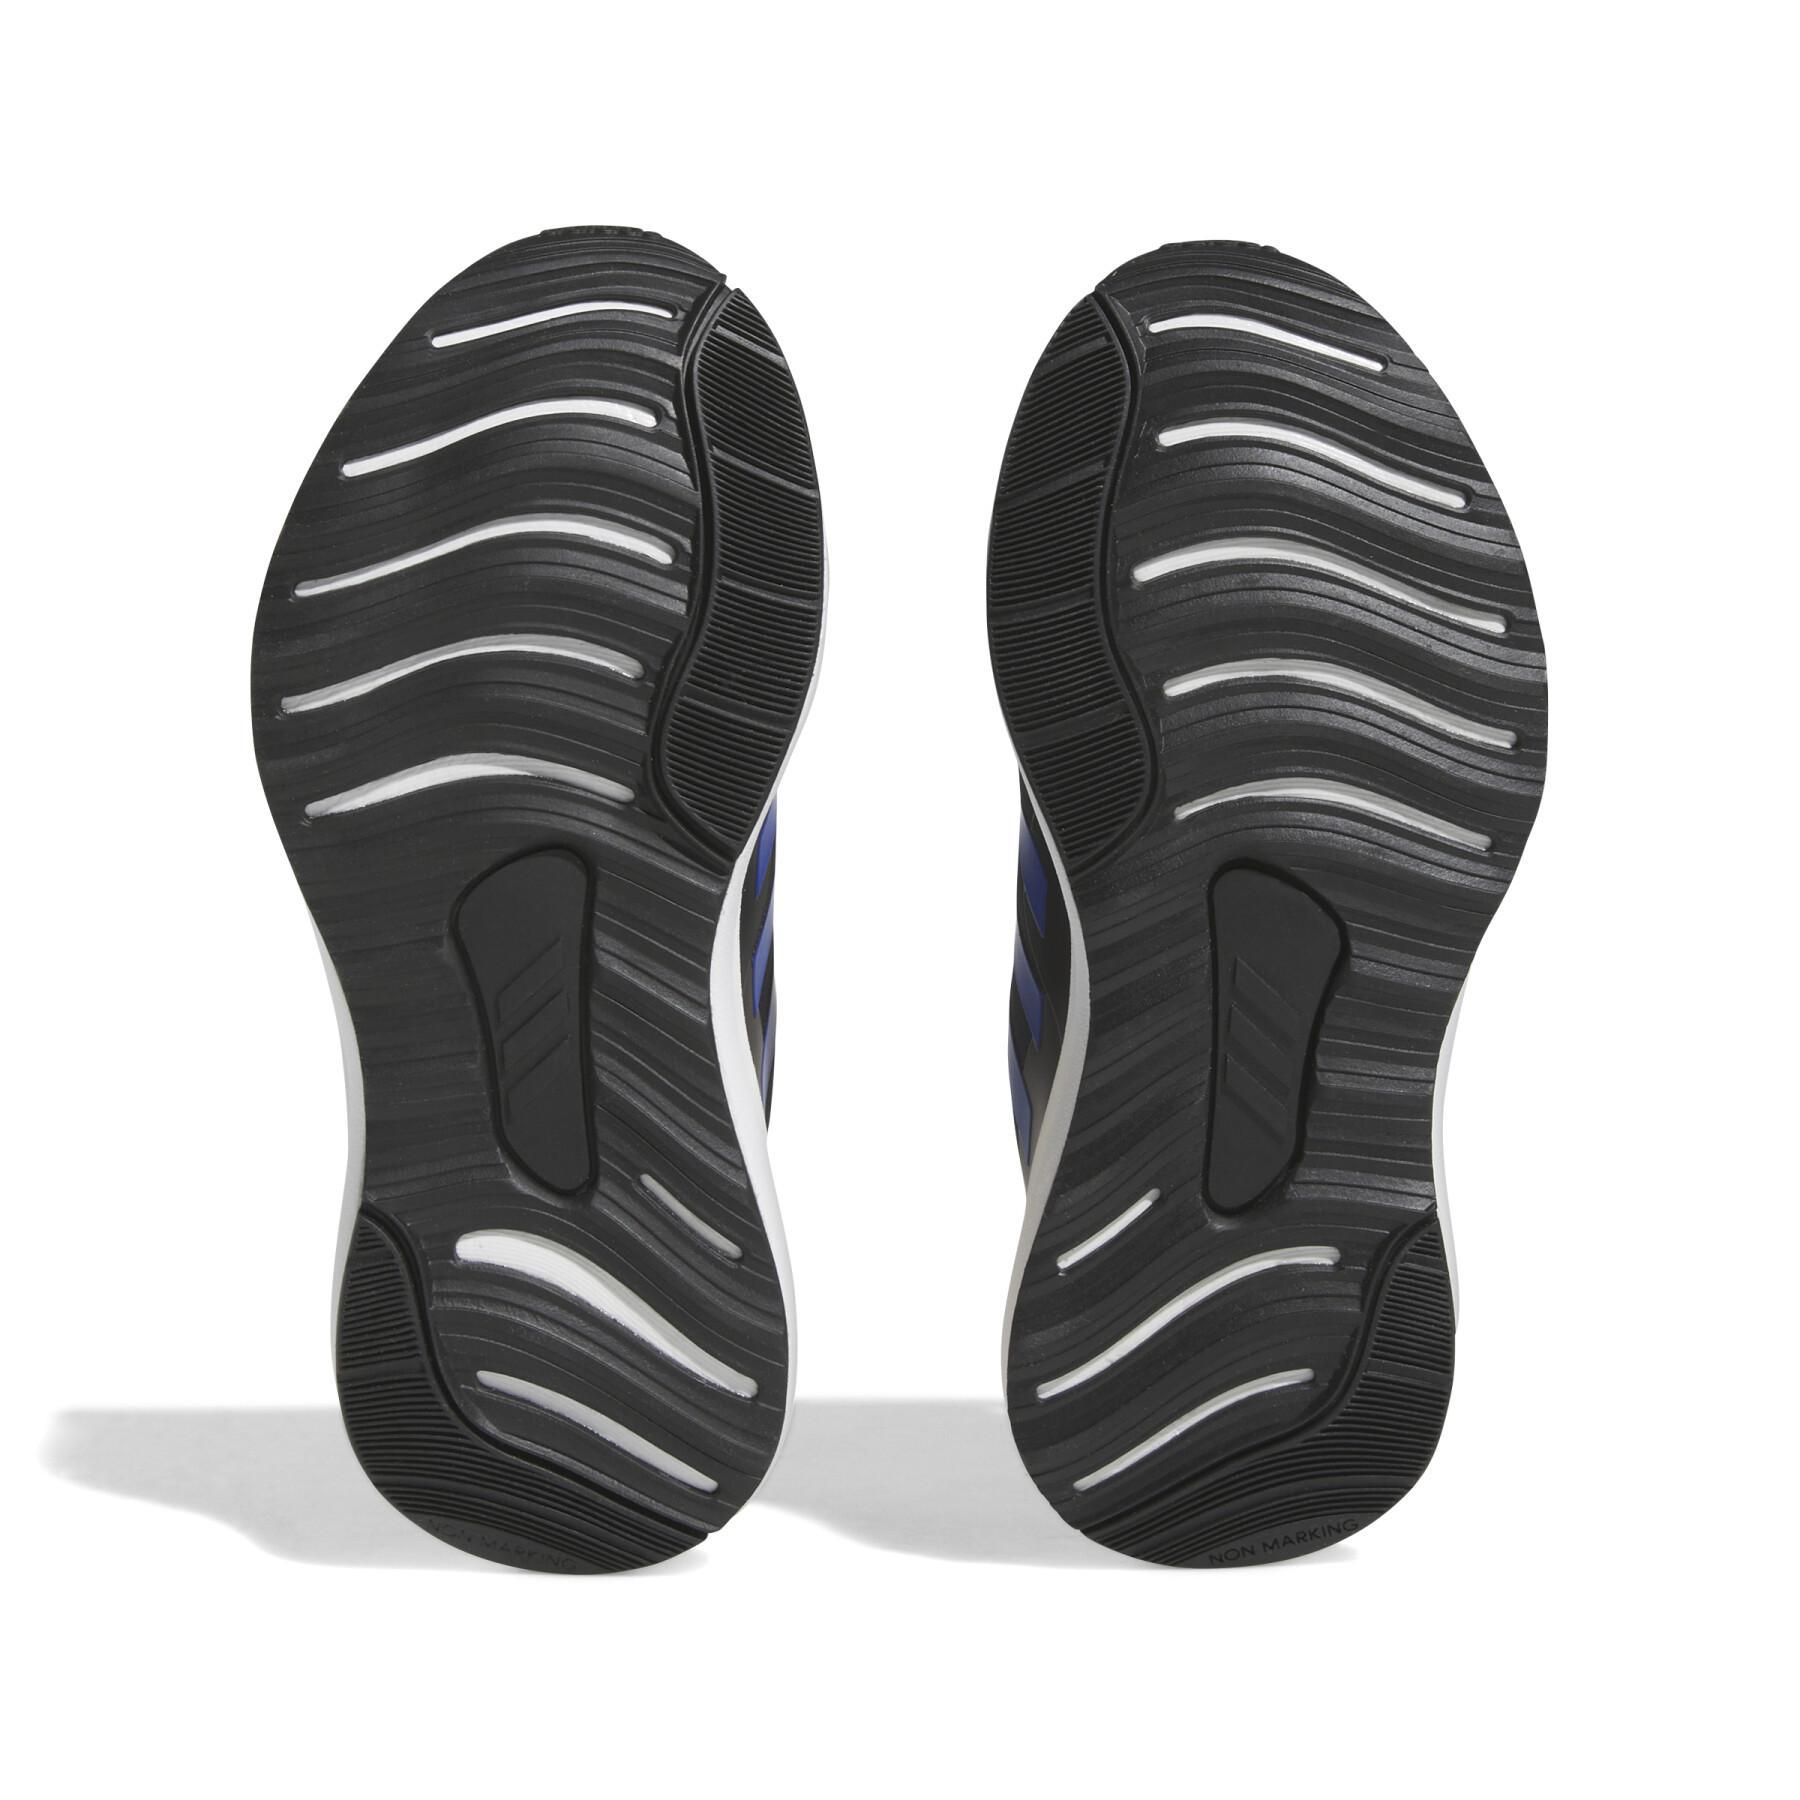 Children's running shoes adidas FortaRun Sport 50